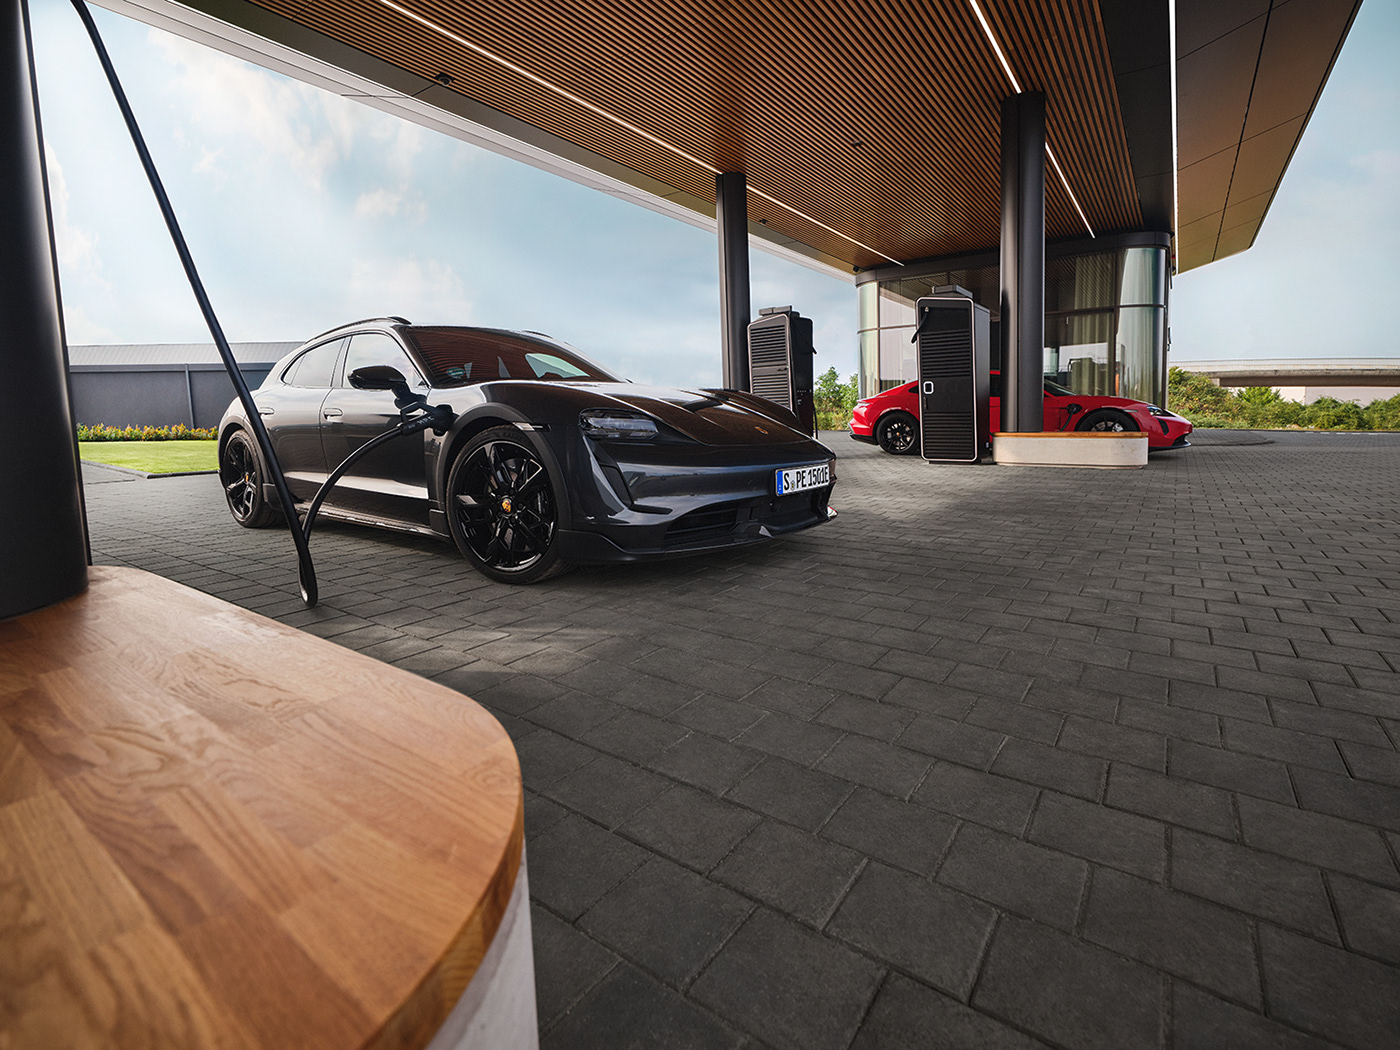 Porsche Taycan automotive   transportation electric vehicle charging station Electric Car